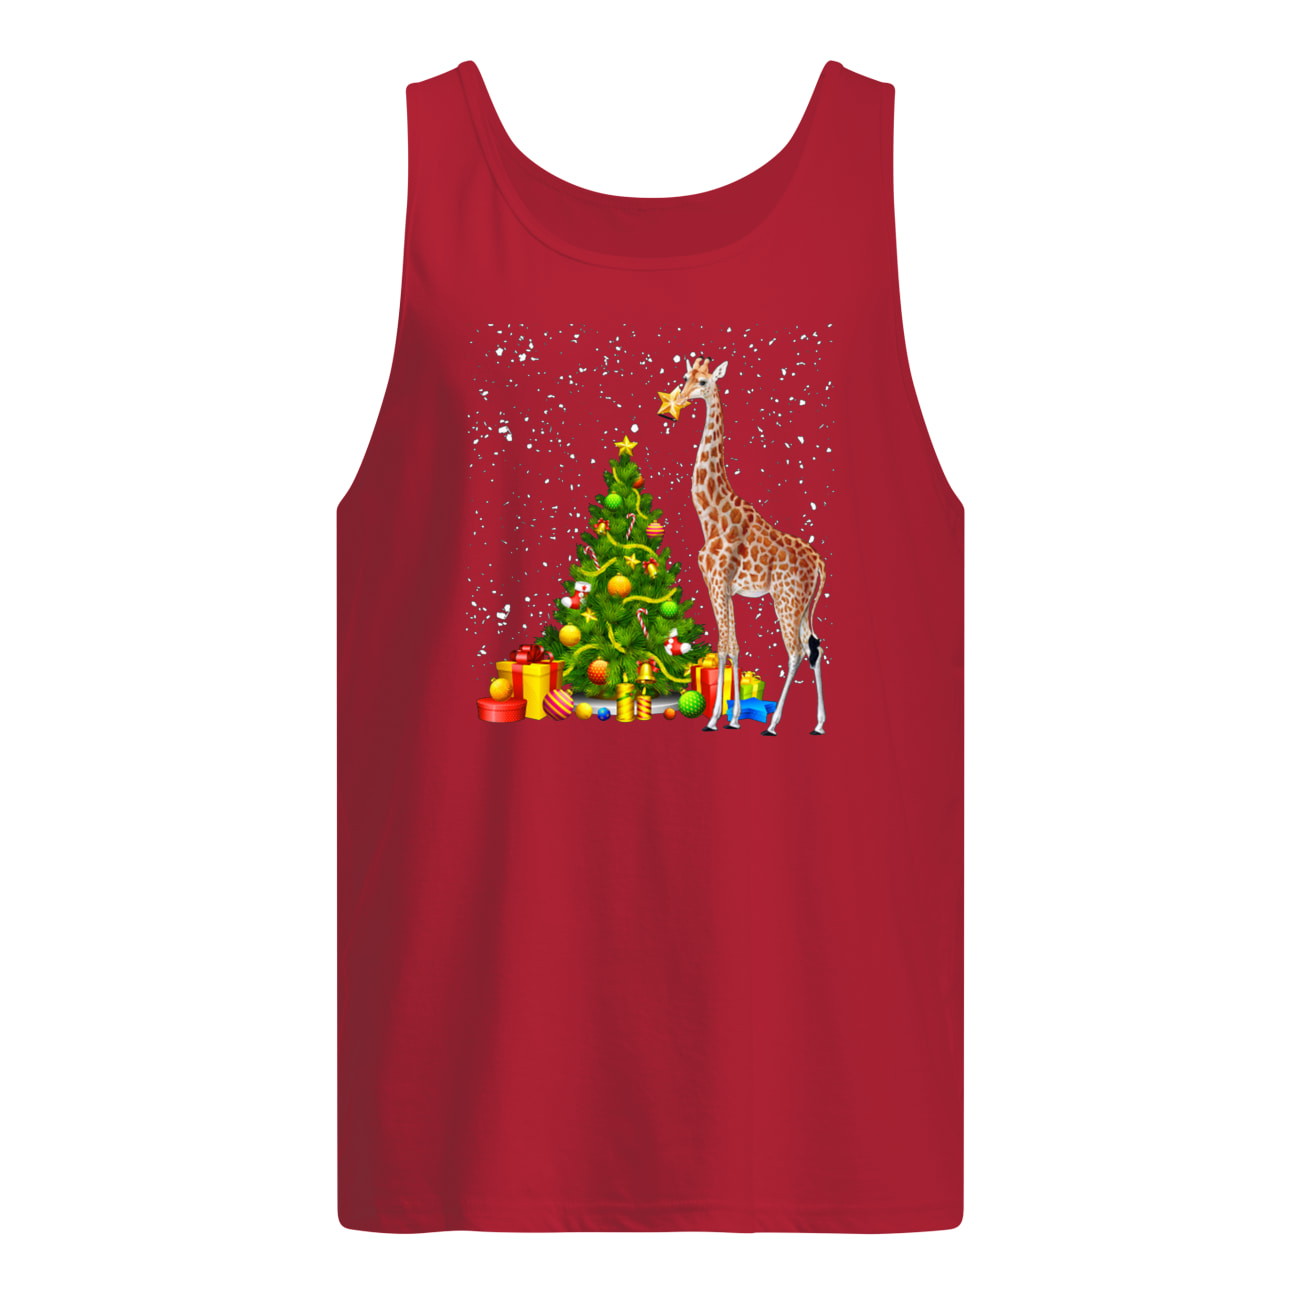 Giraffe and christmas tree tank top